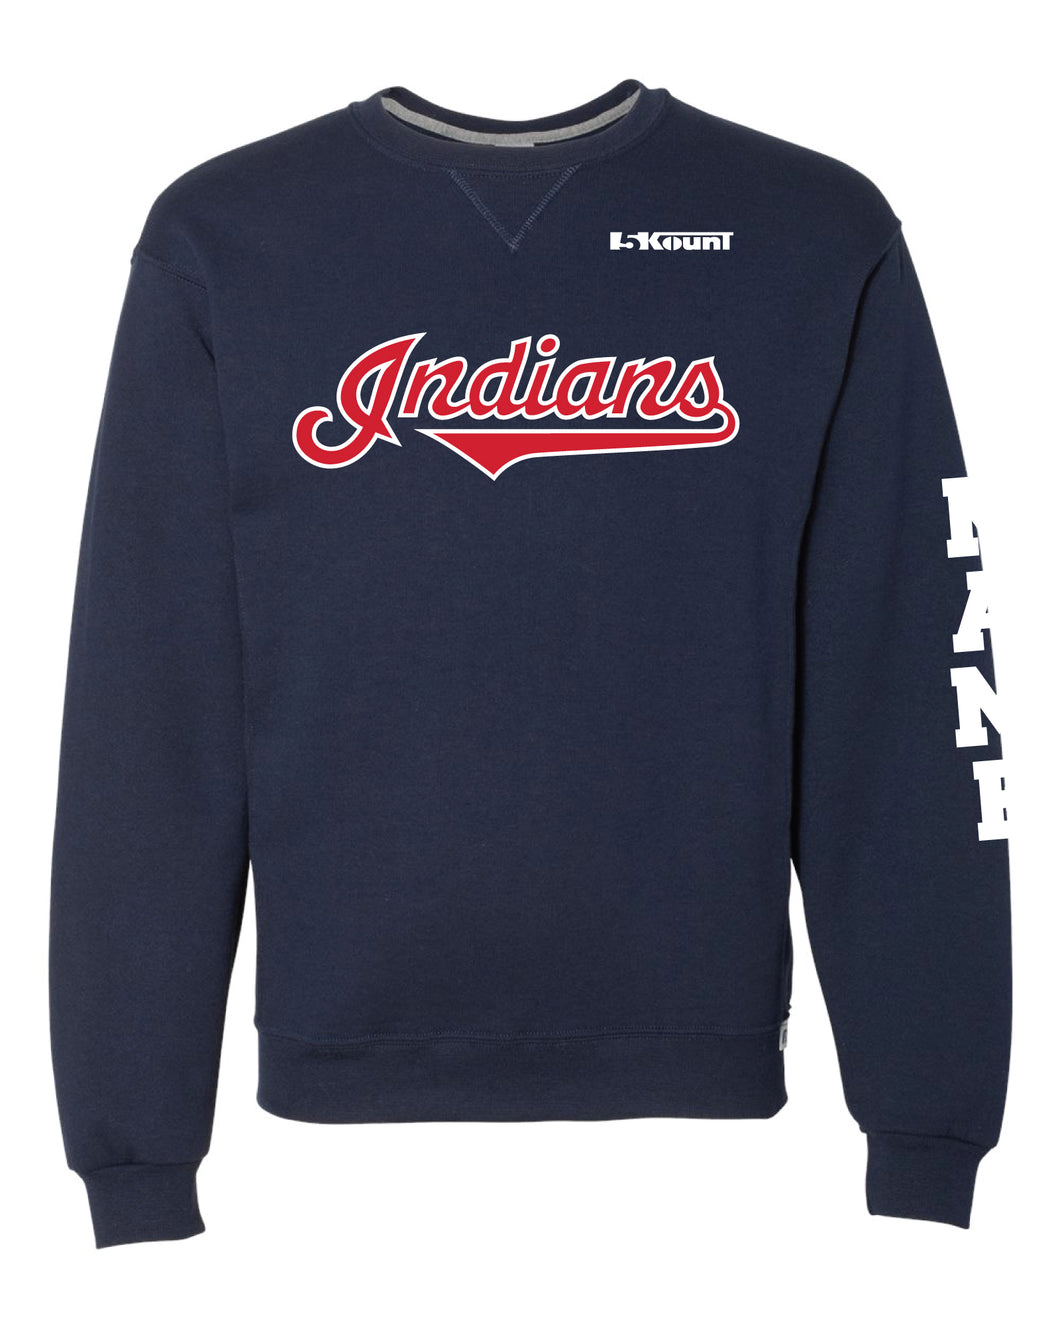 Indians Baseball Russell Athletic Cotton Crewneck Sweatshirt - Navy - 5KounT2018